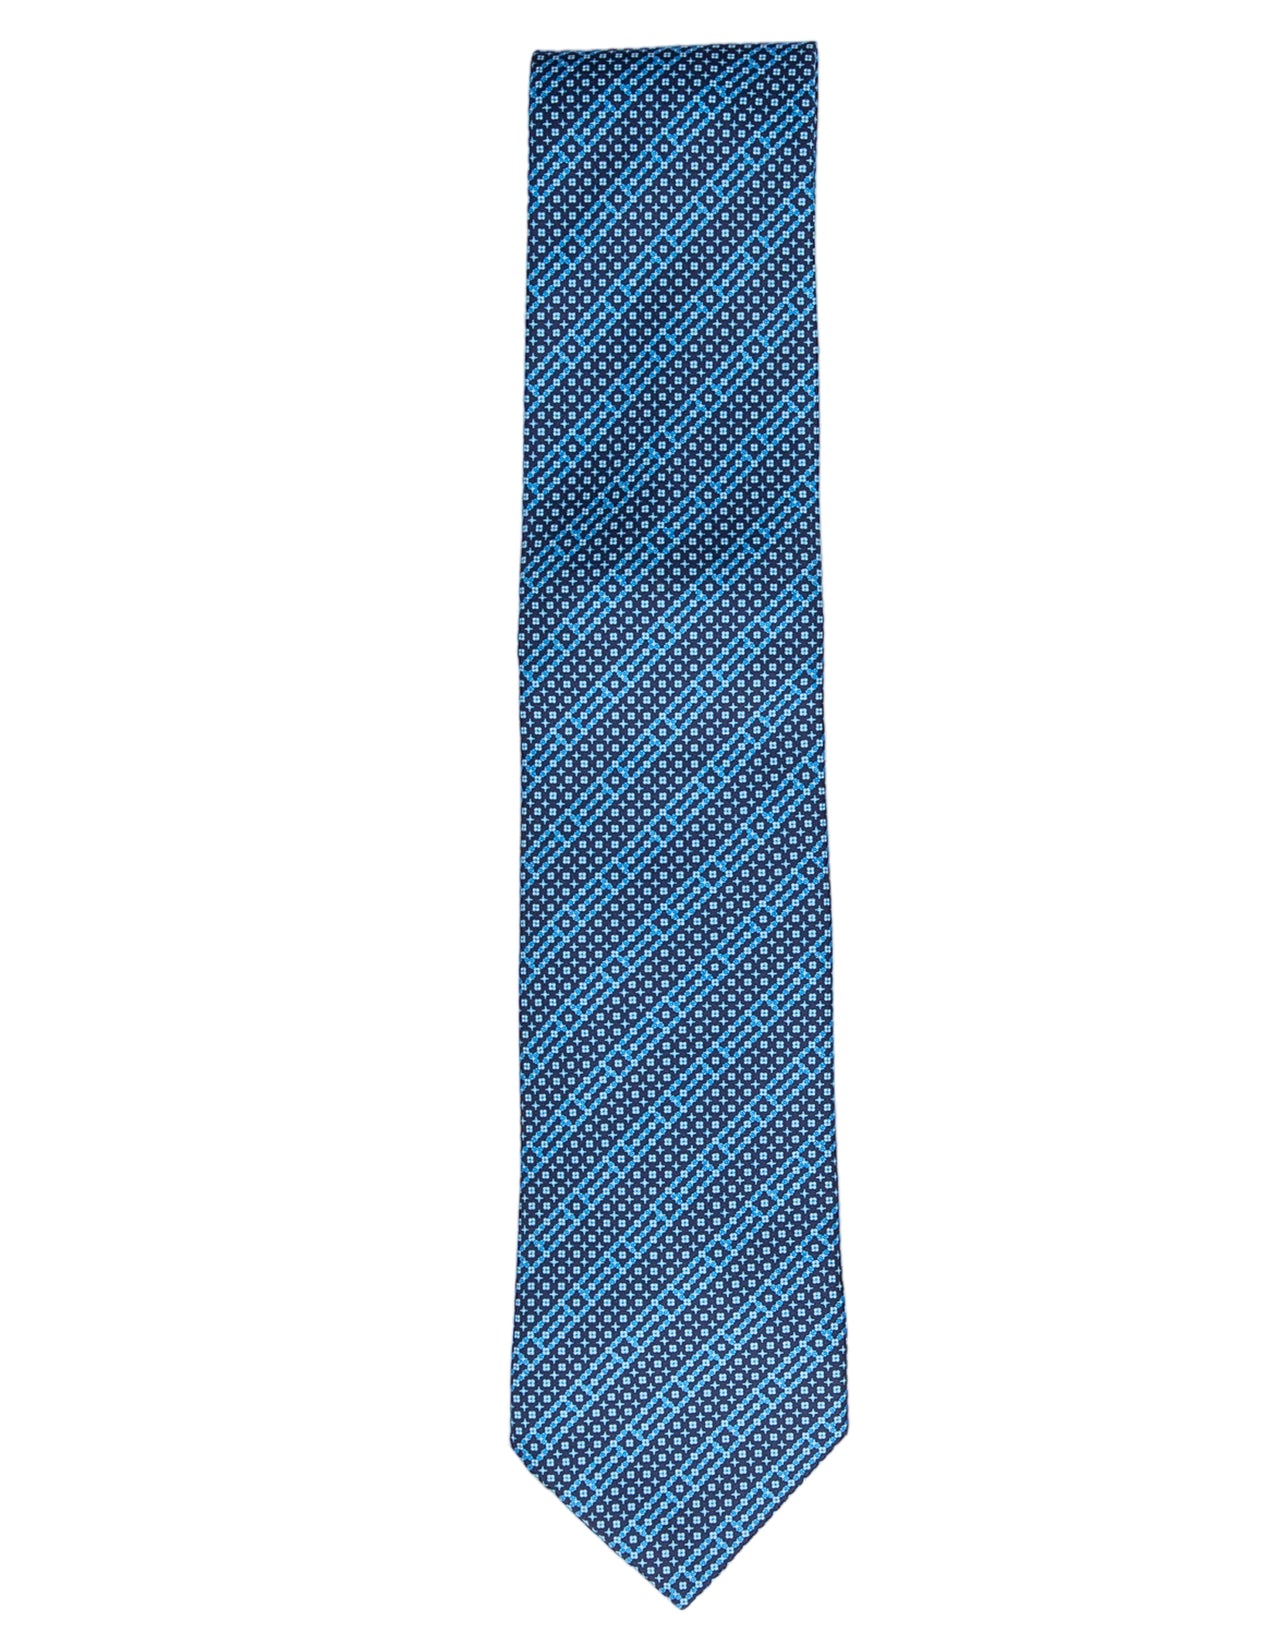 STEFANO RICCI Silk Tie & Pocket Square Set BLUE/LIGHT BLUE